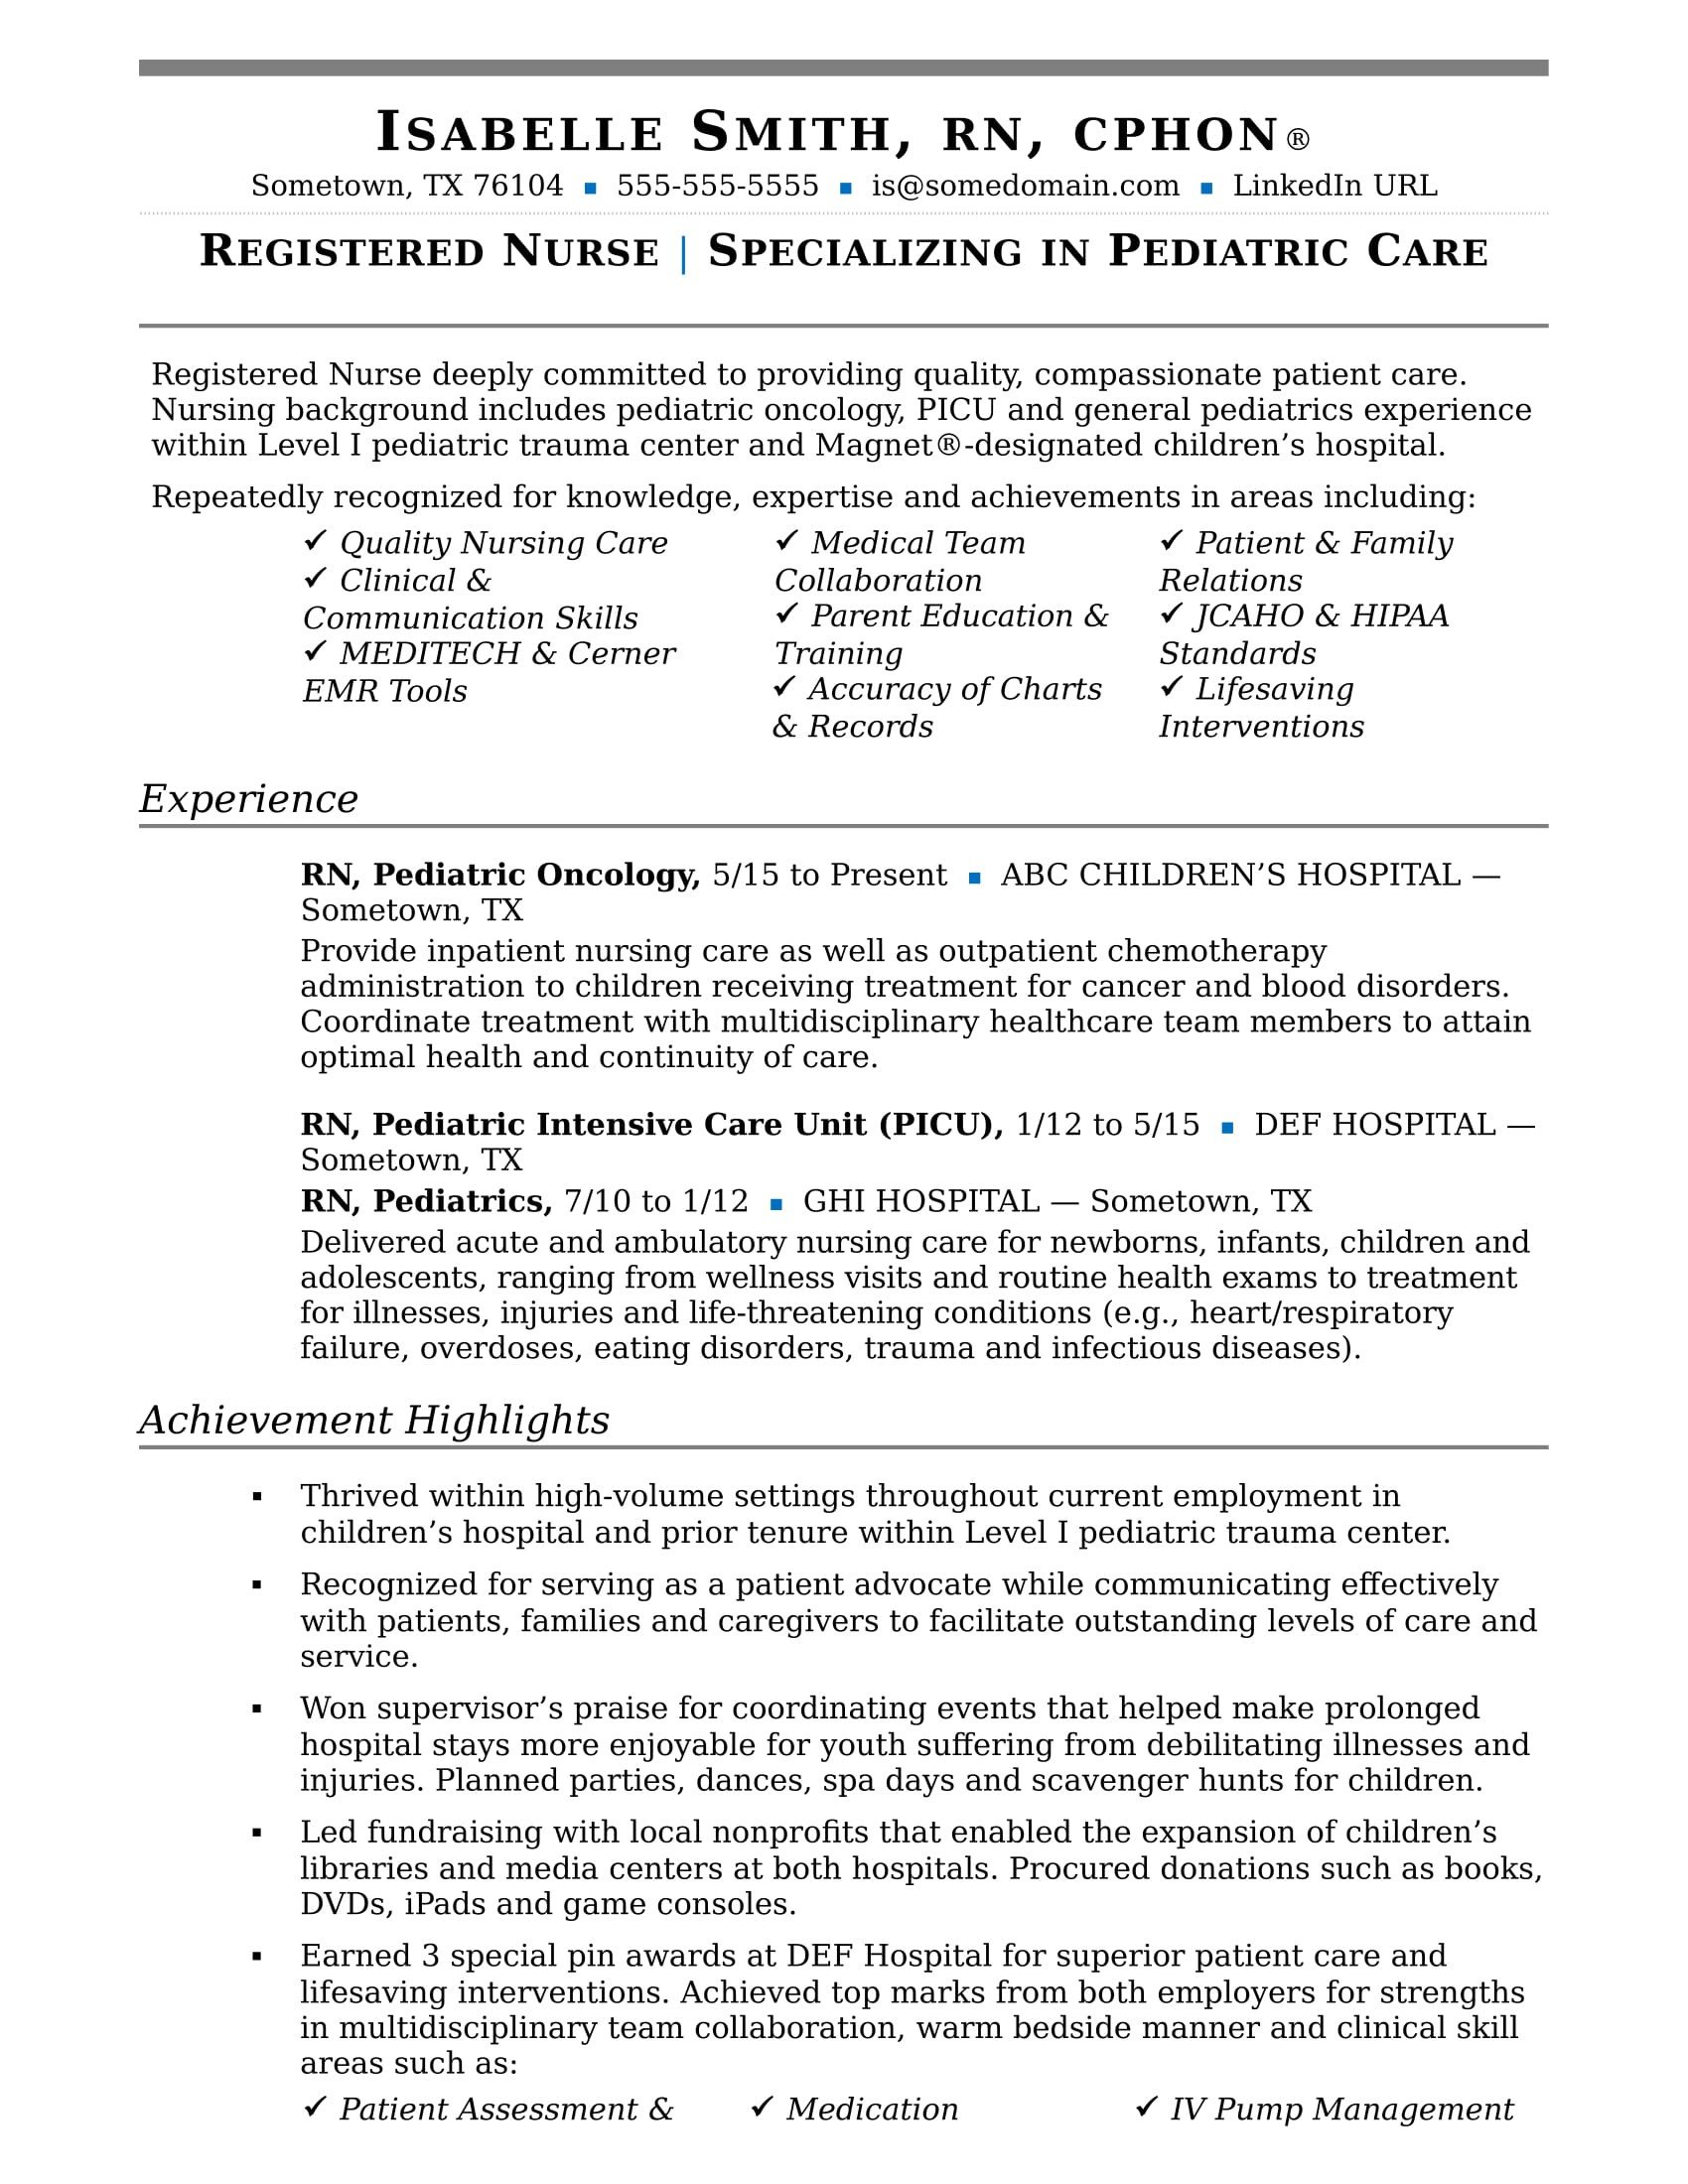 Resume Template for Nursing Nurse Resume Sample